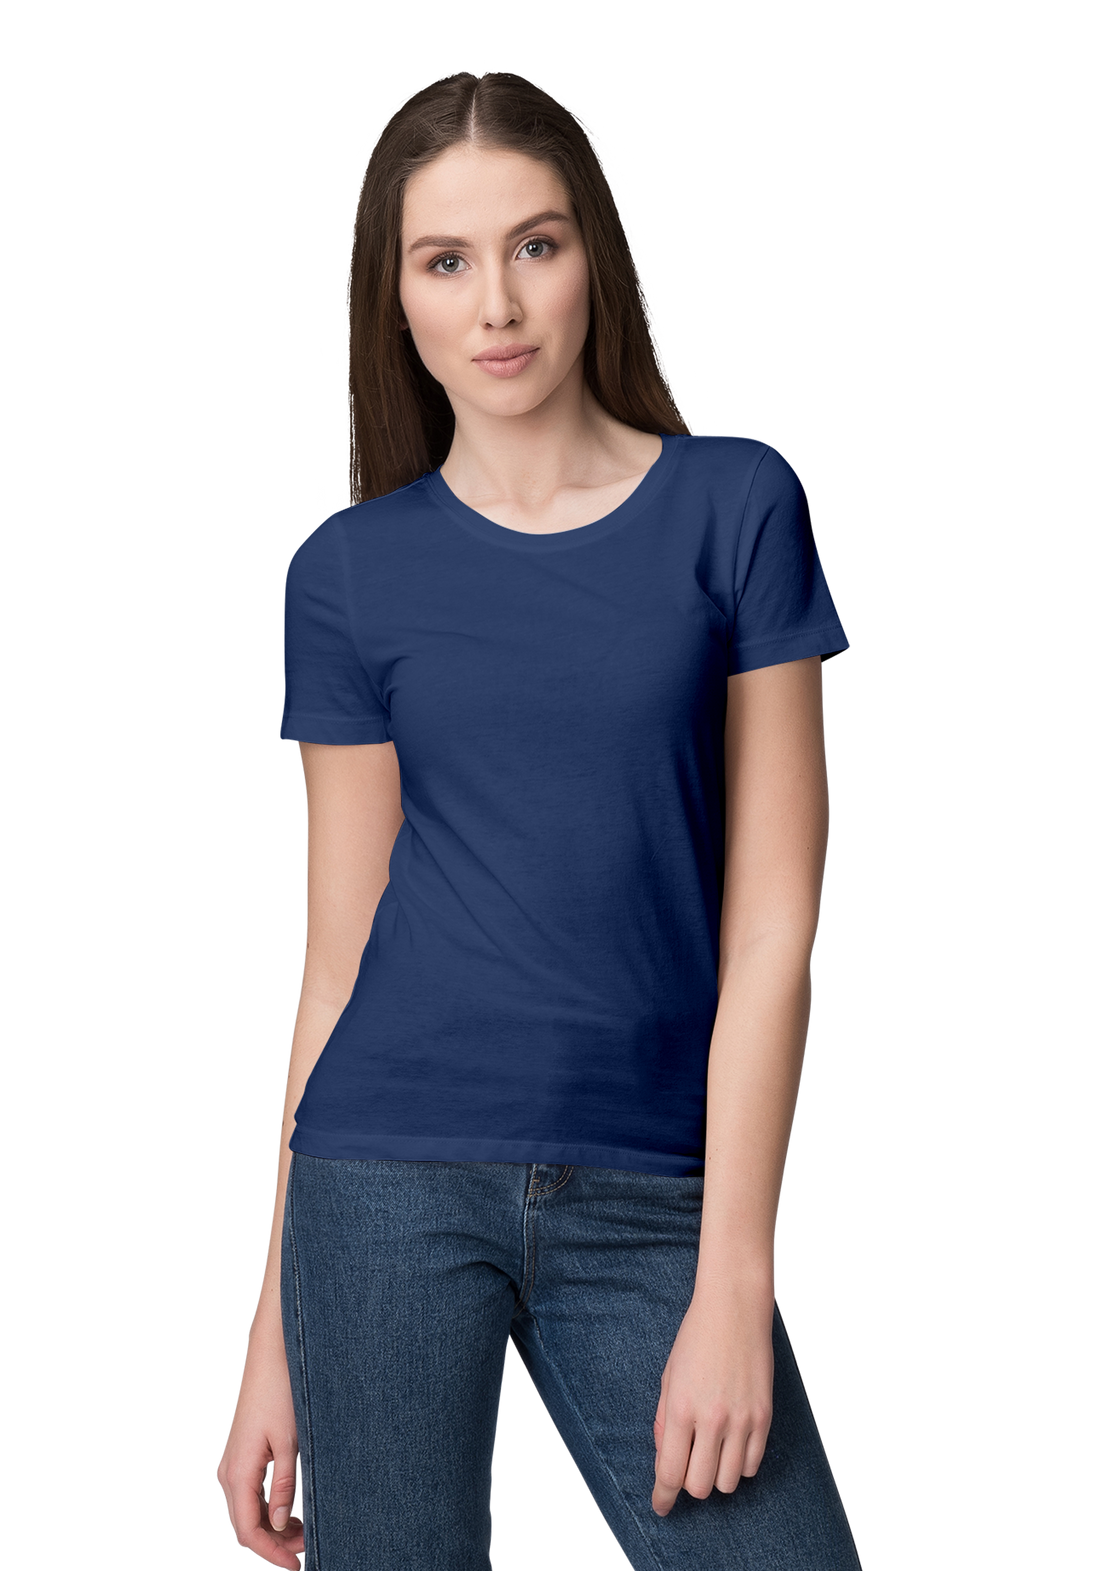 Unisex Basic Plain Navy Blue T-shirt